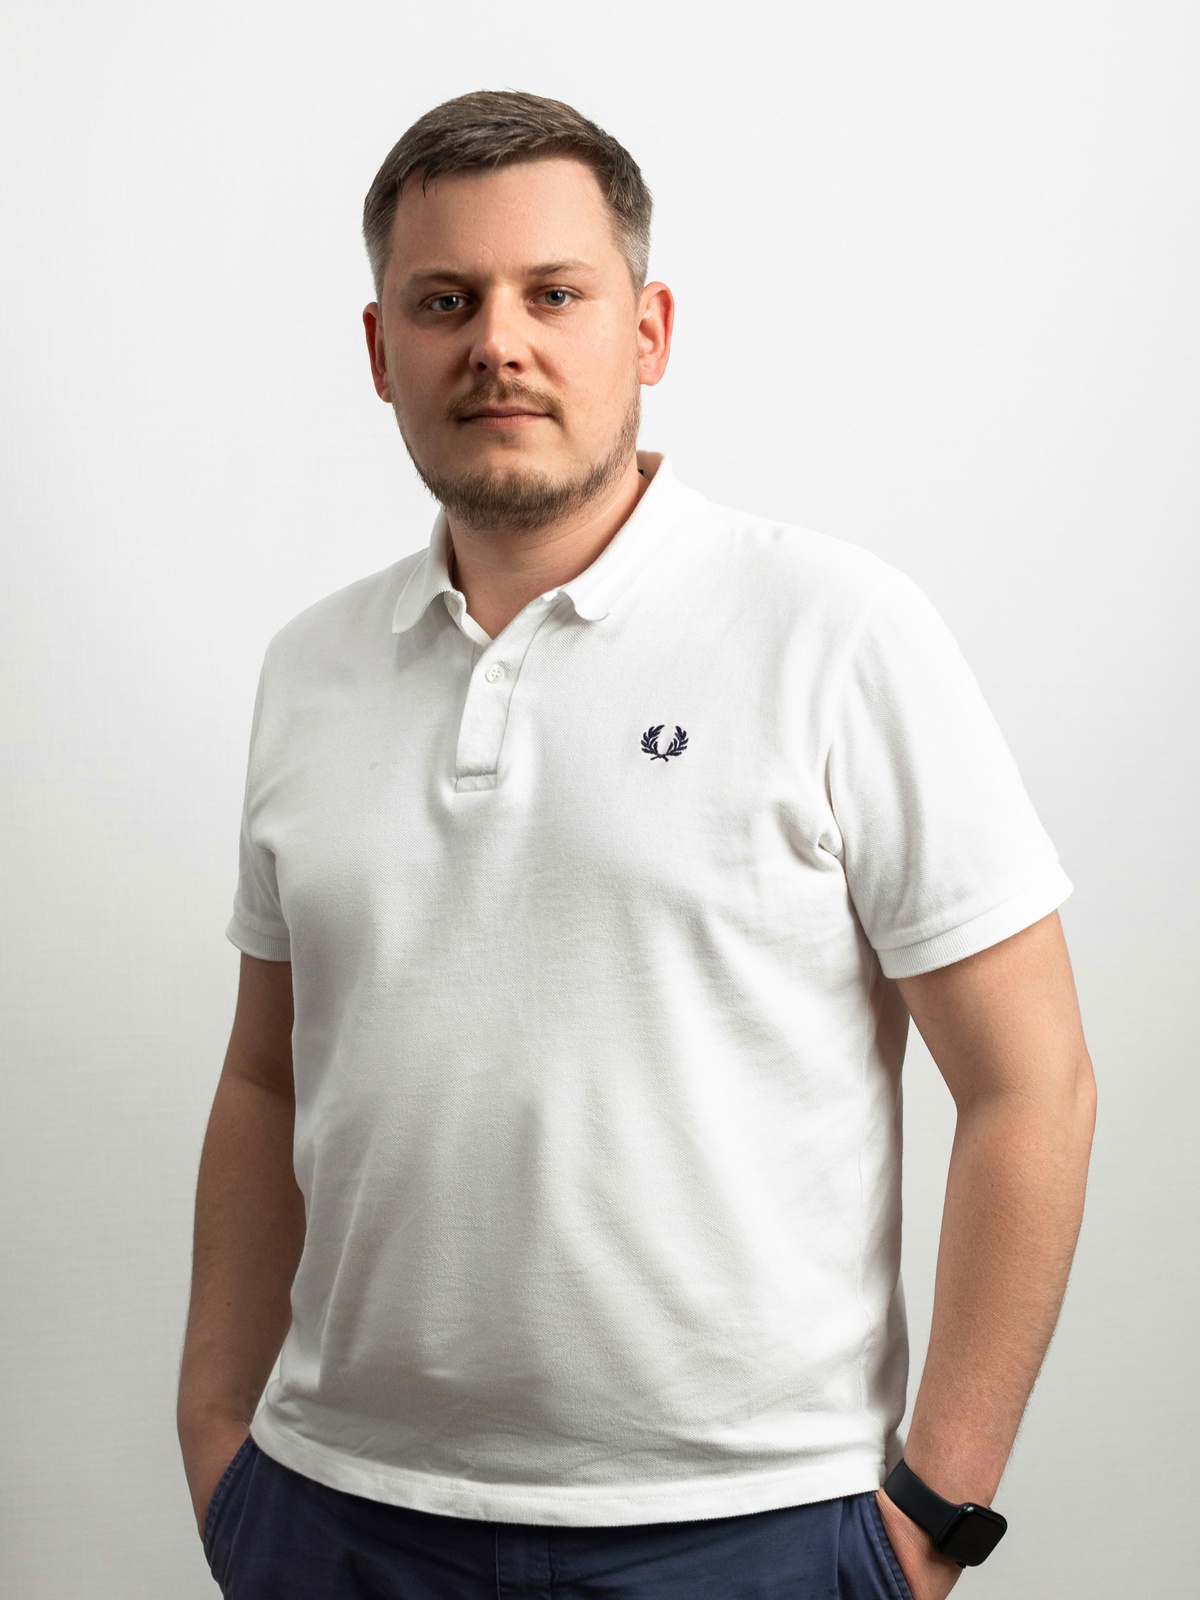 Александр Стихарев - Founder